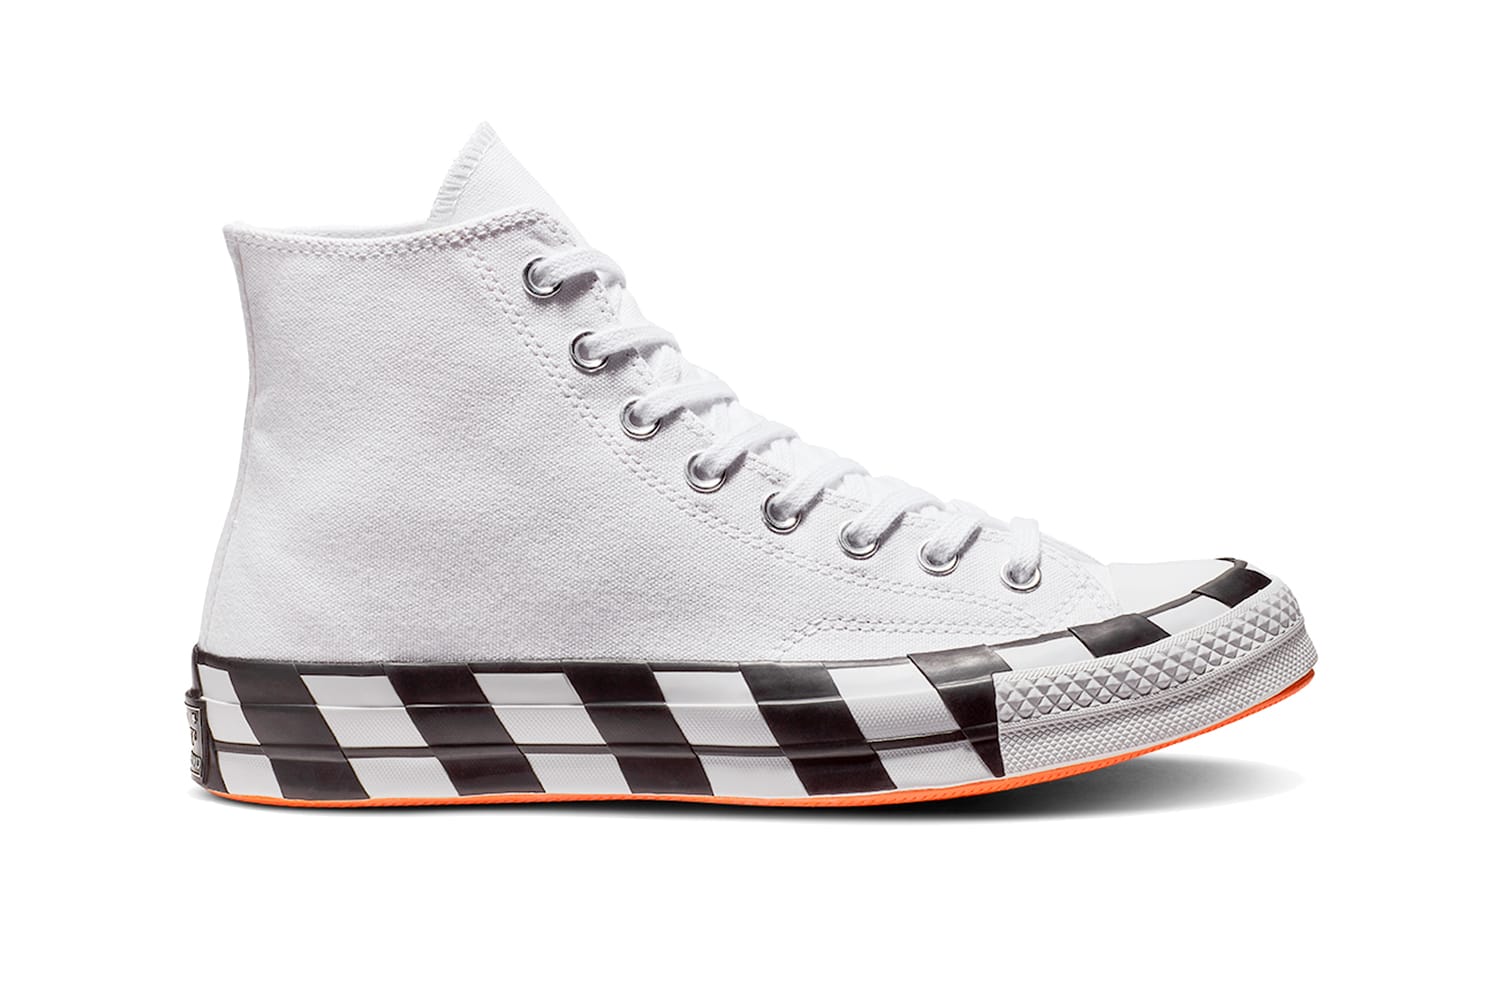 white converse like shoes